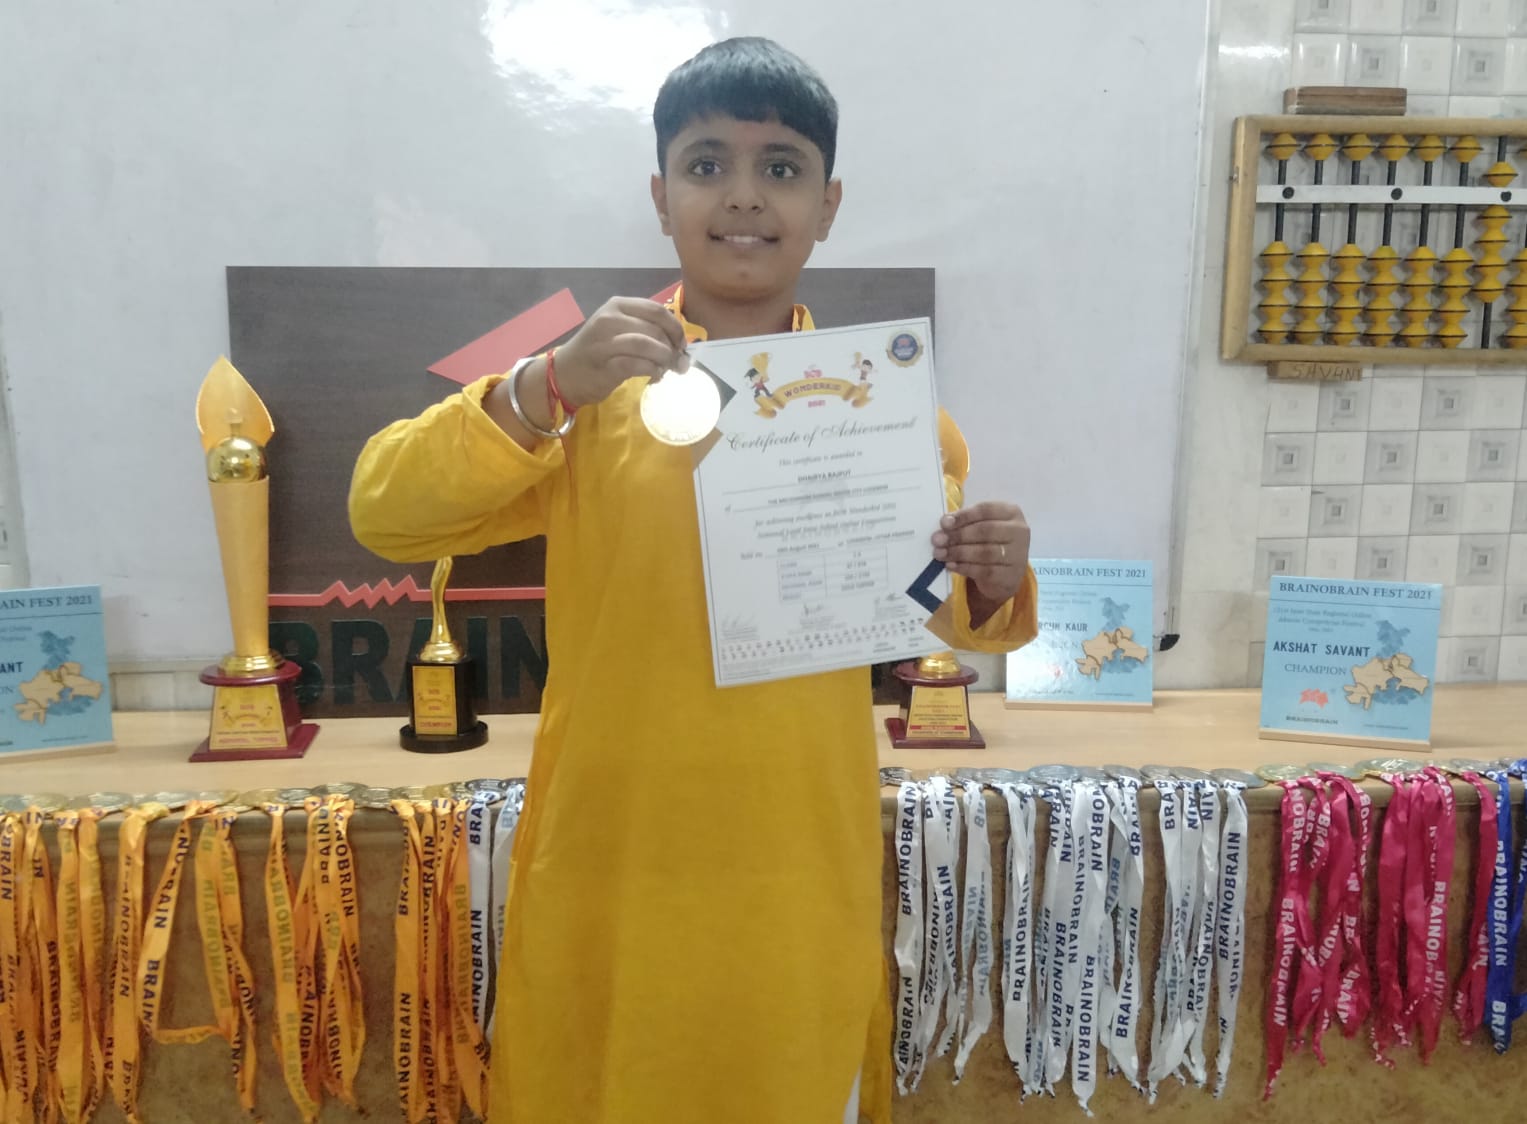 Dhairya Rajput of Grade 5A won Gold medal in Brainobrain Wonderkid competition.